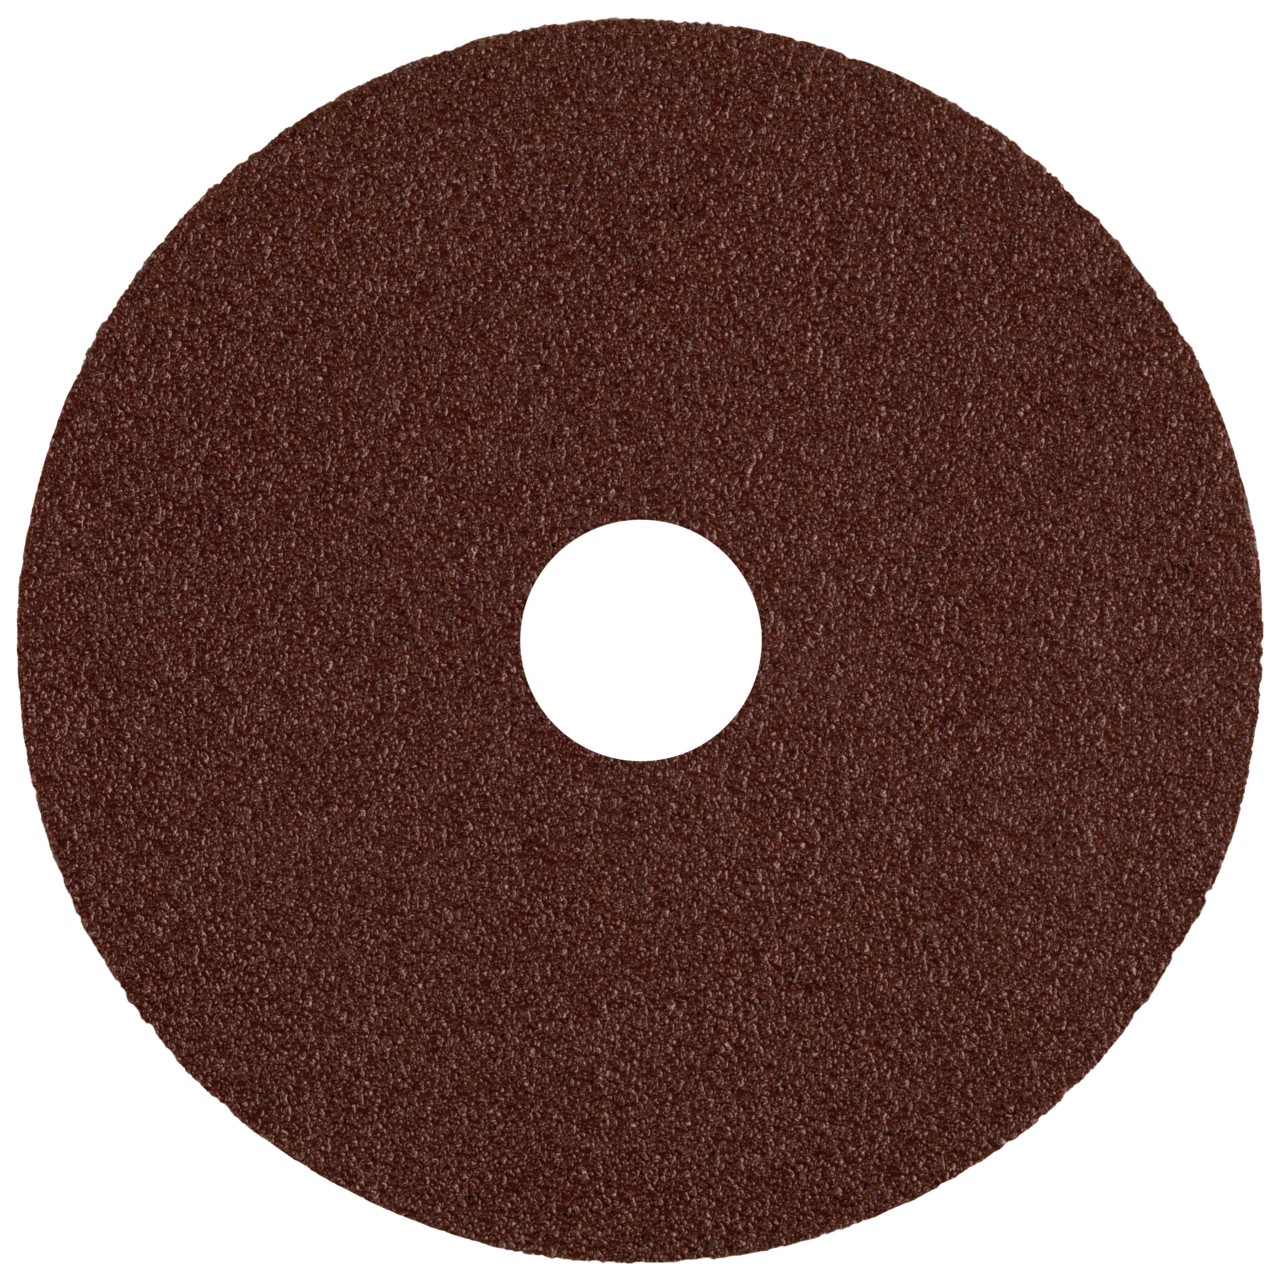 Tyrolit A-B02 V Vulcanised fibre disc DxH 180x22 For steel, non-ferrous metals and wood, P60, shape: DISC, Art. 34286510